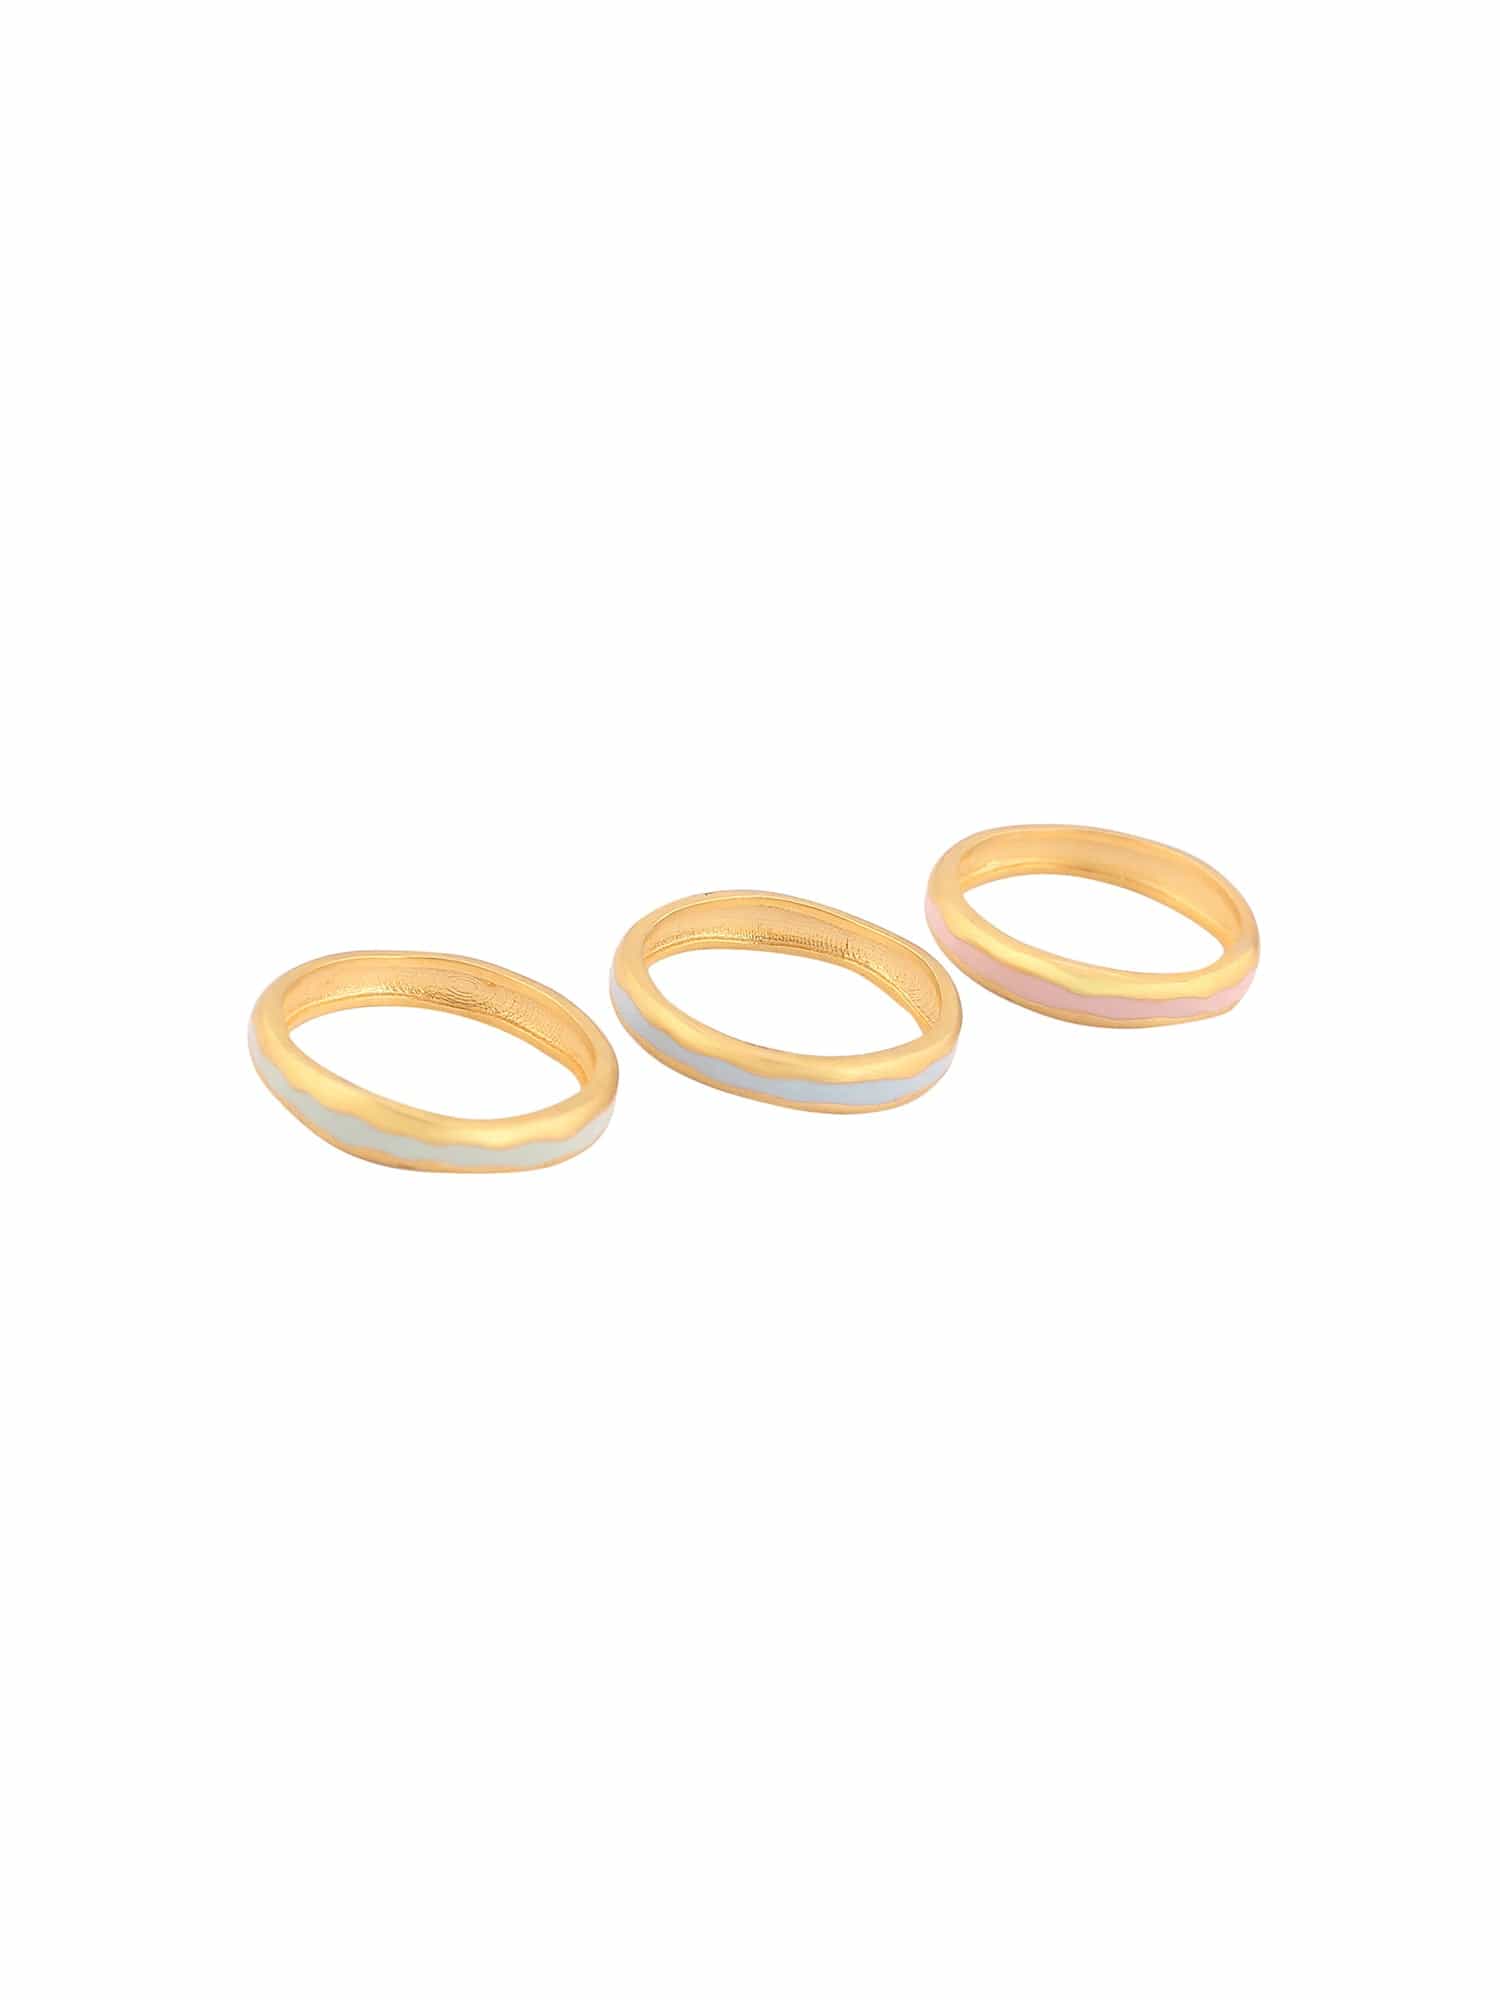 Chiara rings (Set of 3)